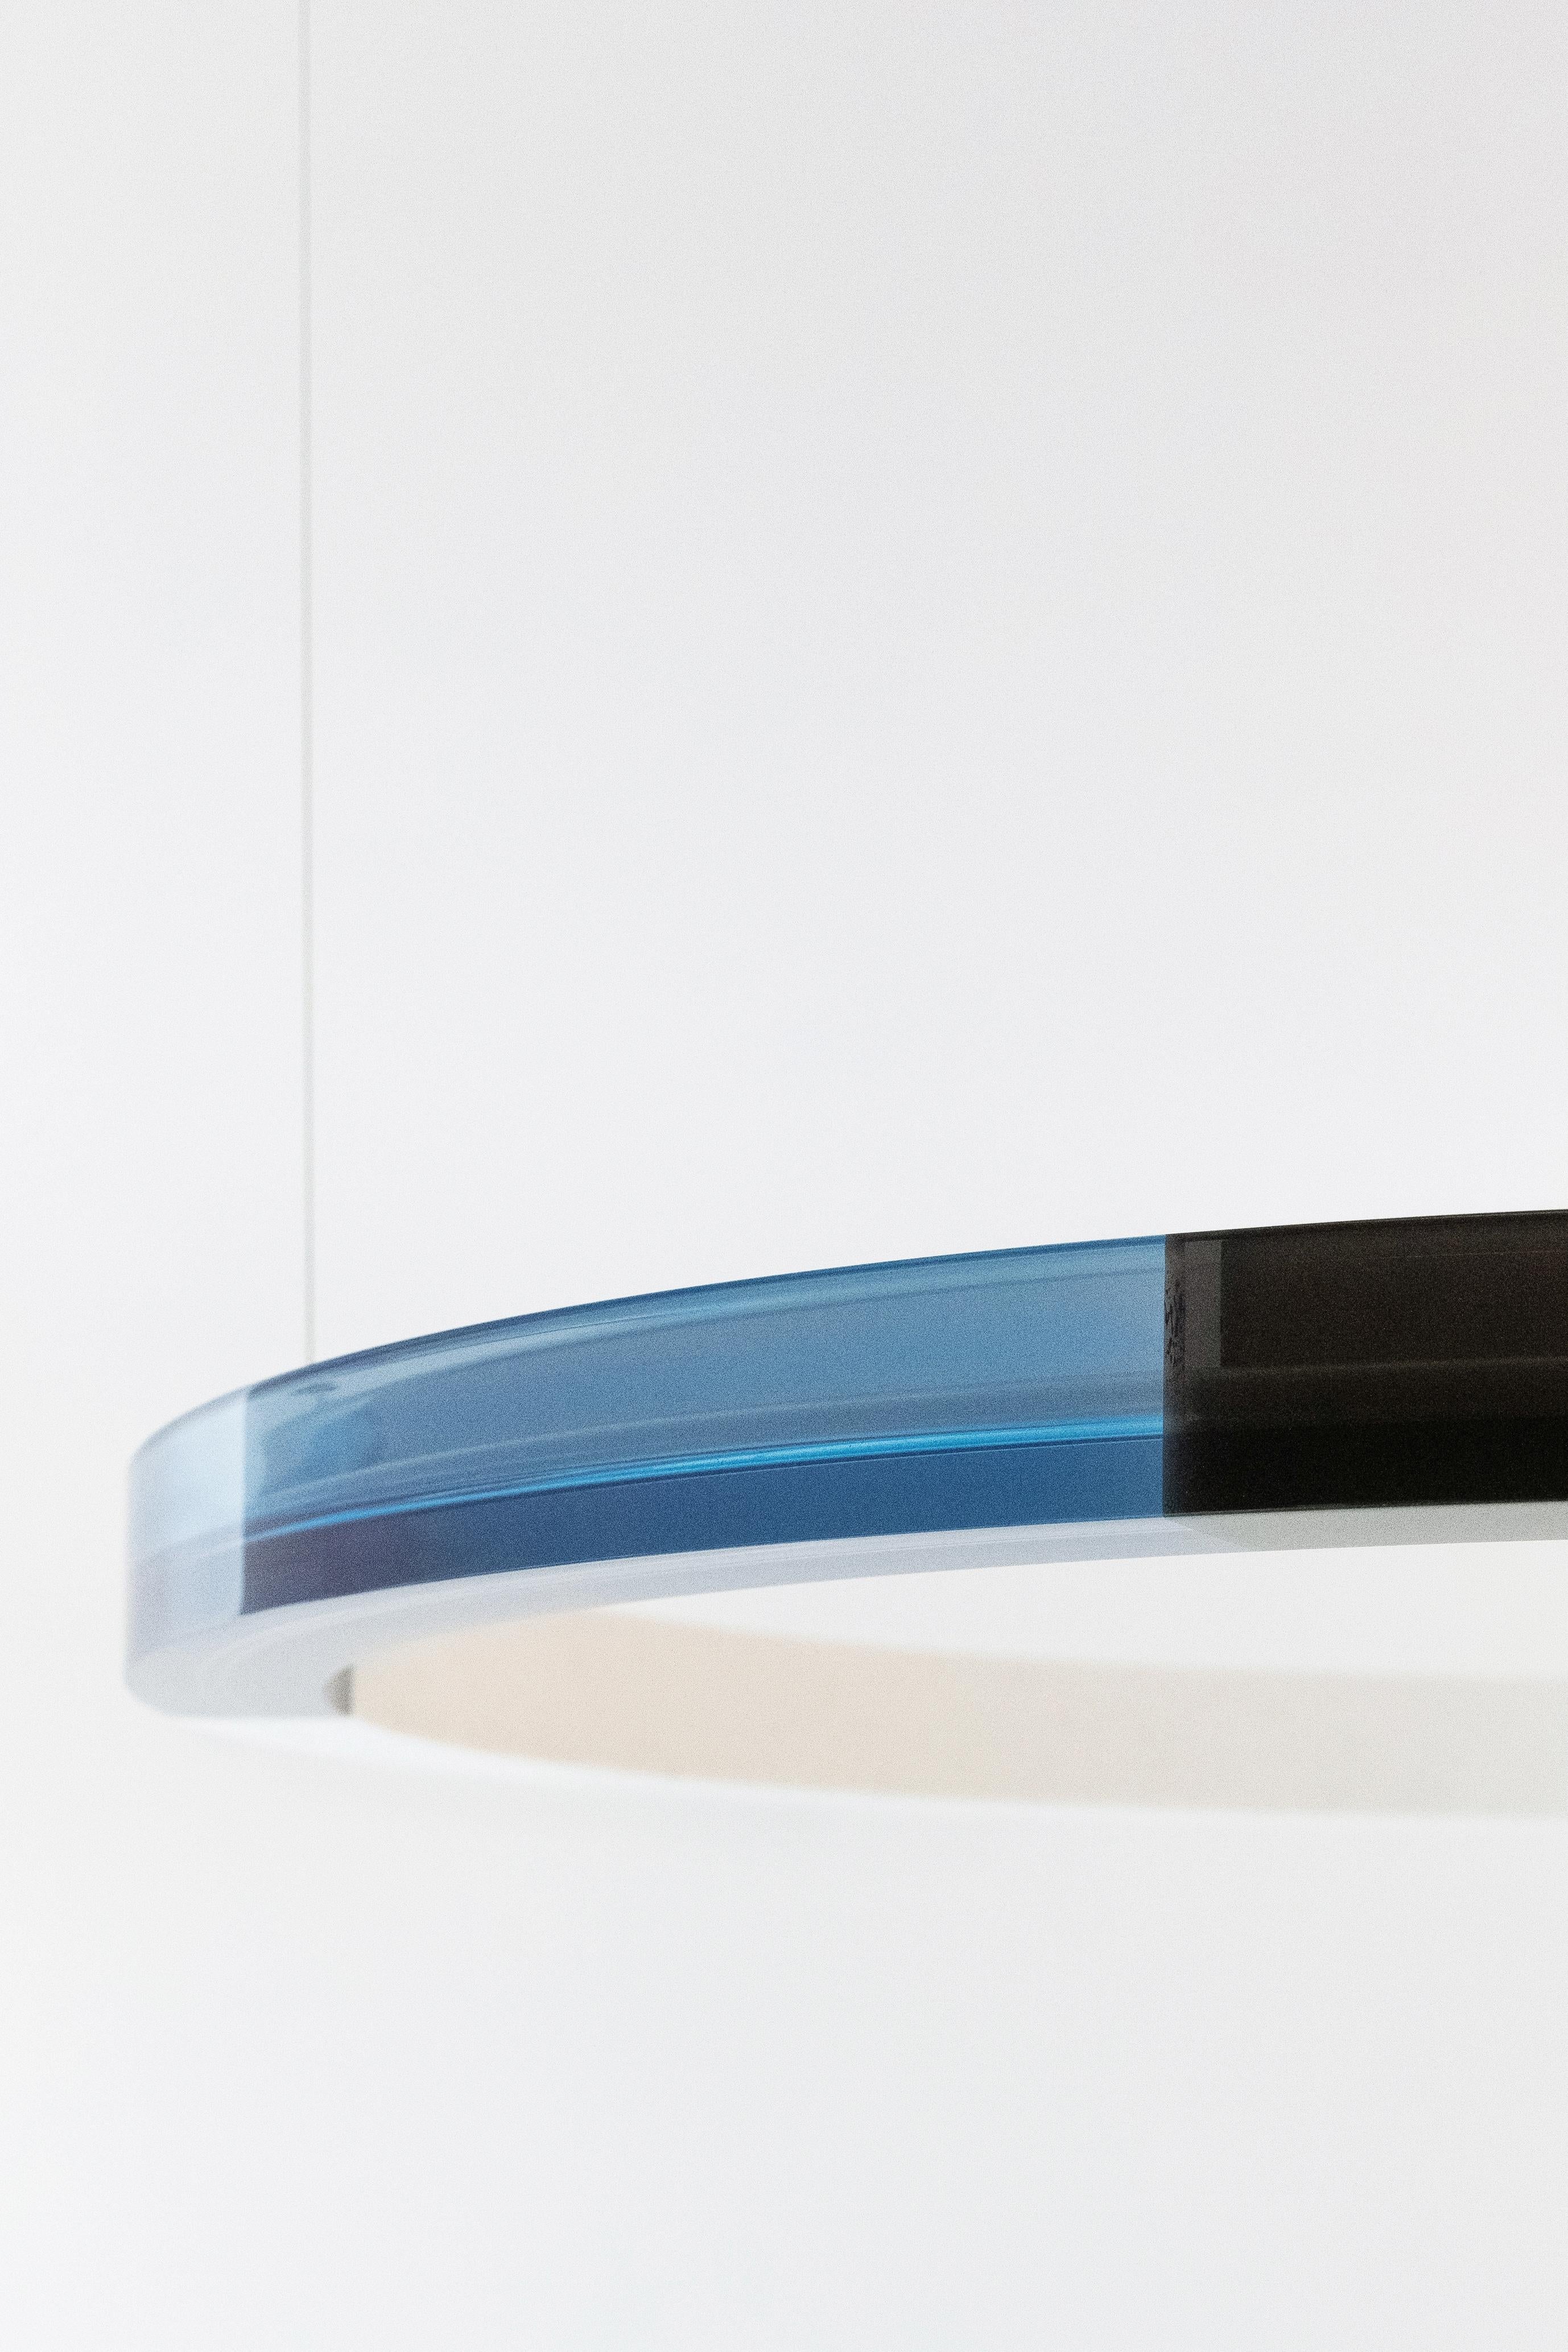 Sabine Marcelis Contemporary Blue Resin Circular Chandelier, Filter Series, 2020 For Sale 2